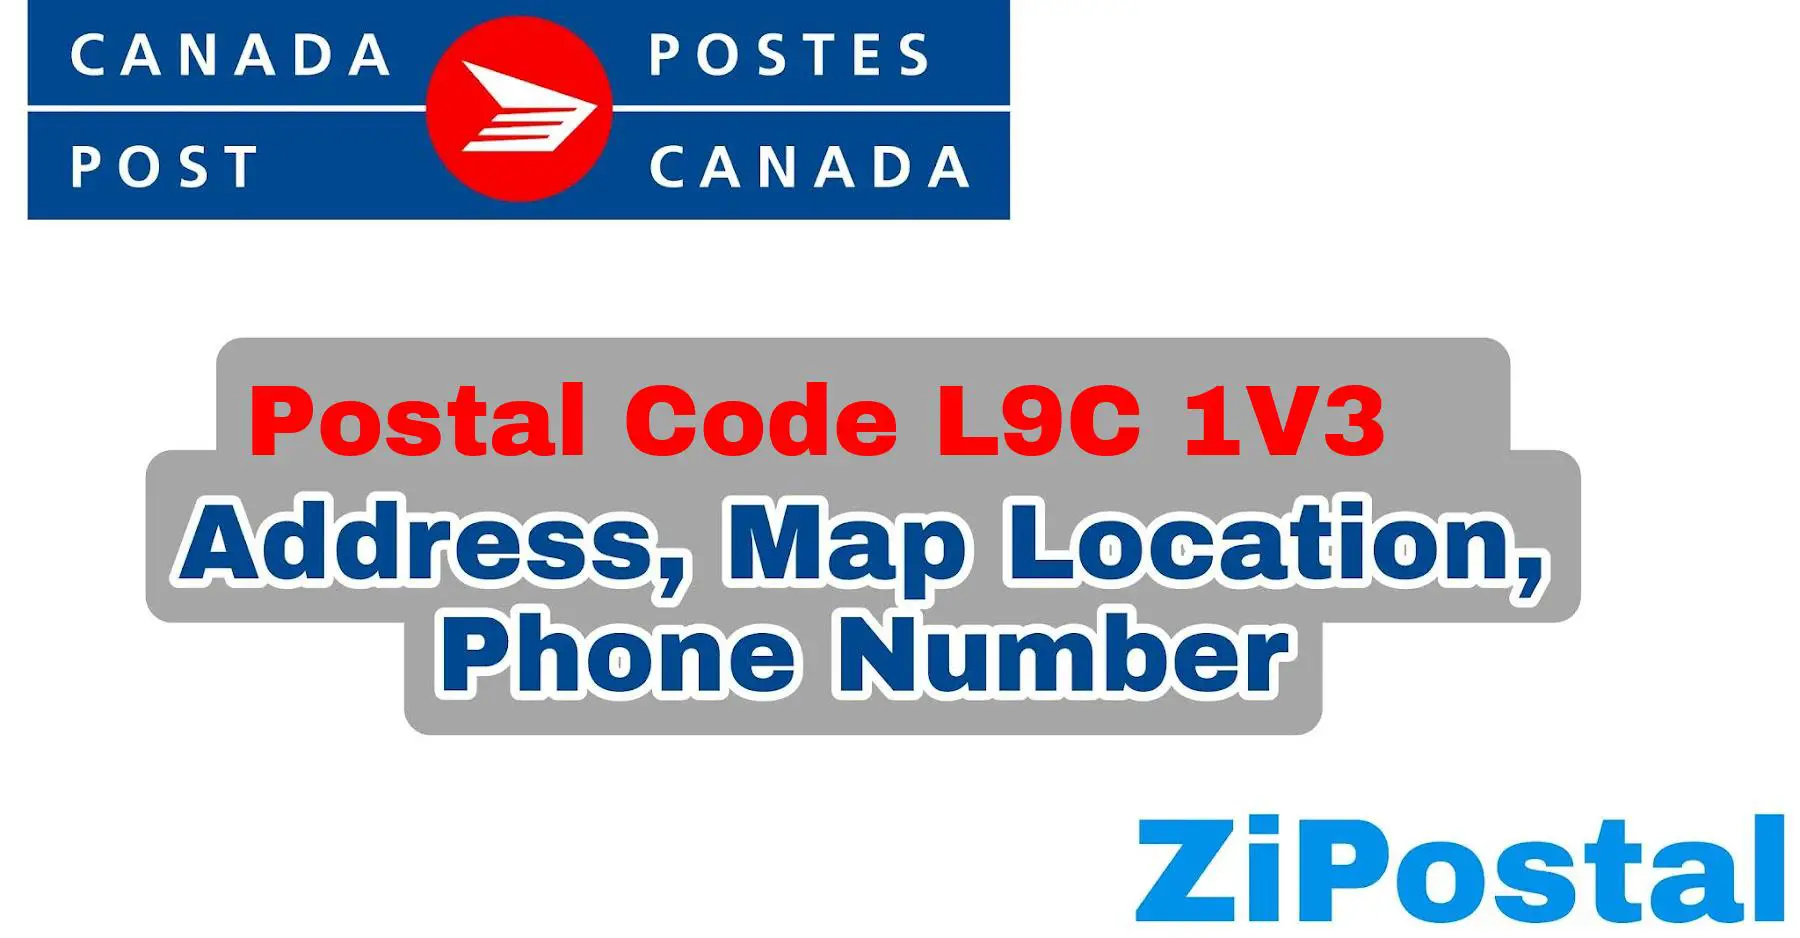 Postal Code L9C 1V3 Address Map Location and Phone Number